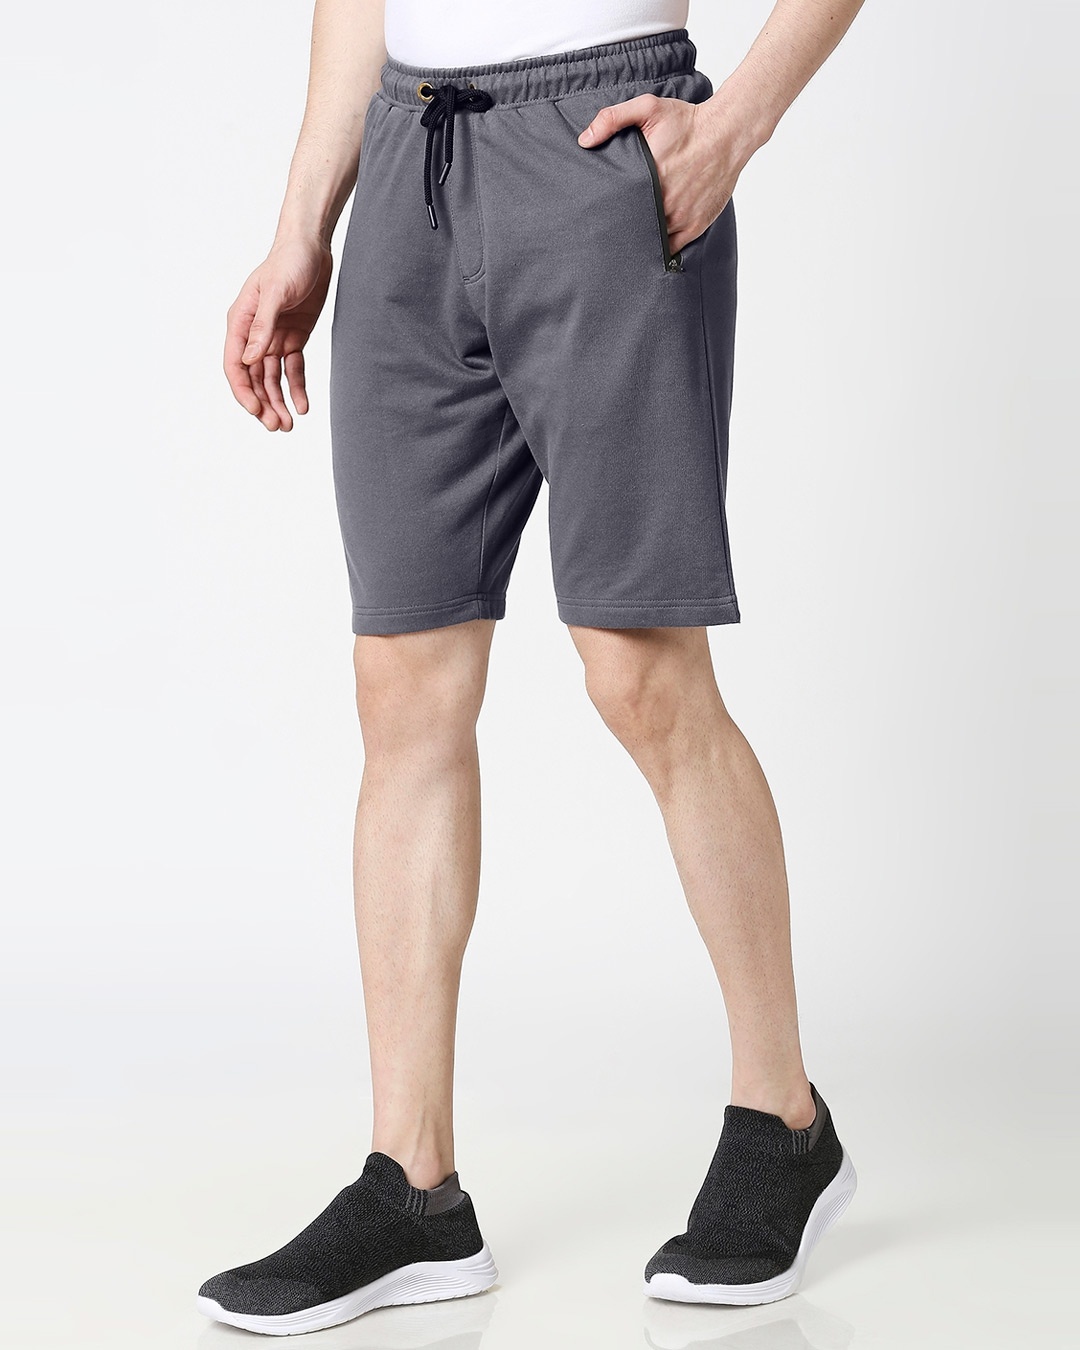 Shop Charcoal Grey India Ink Zipper Shorts Combo